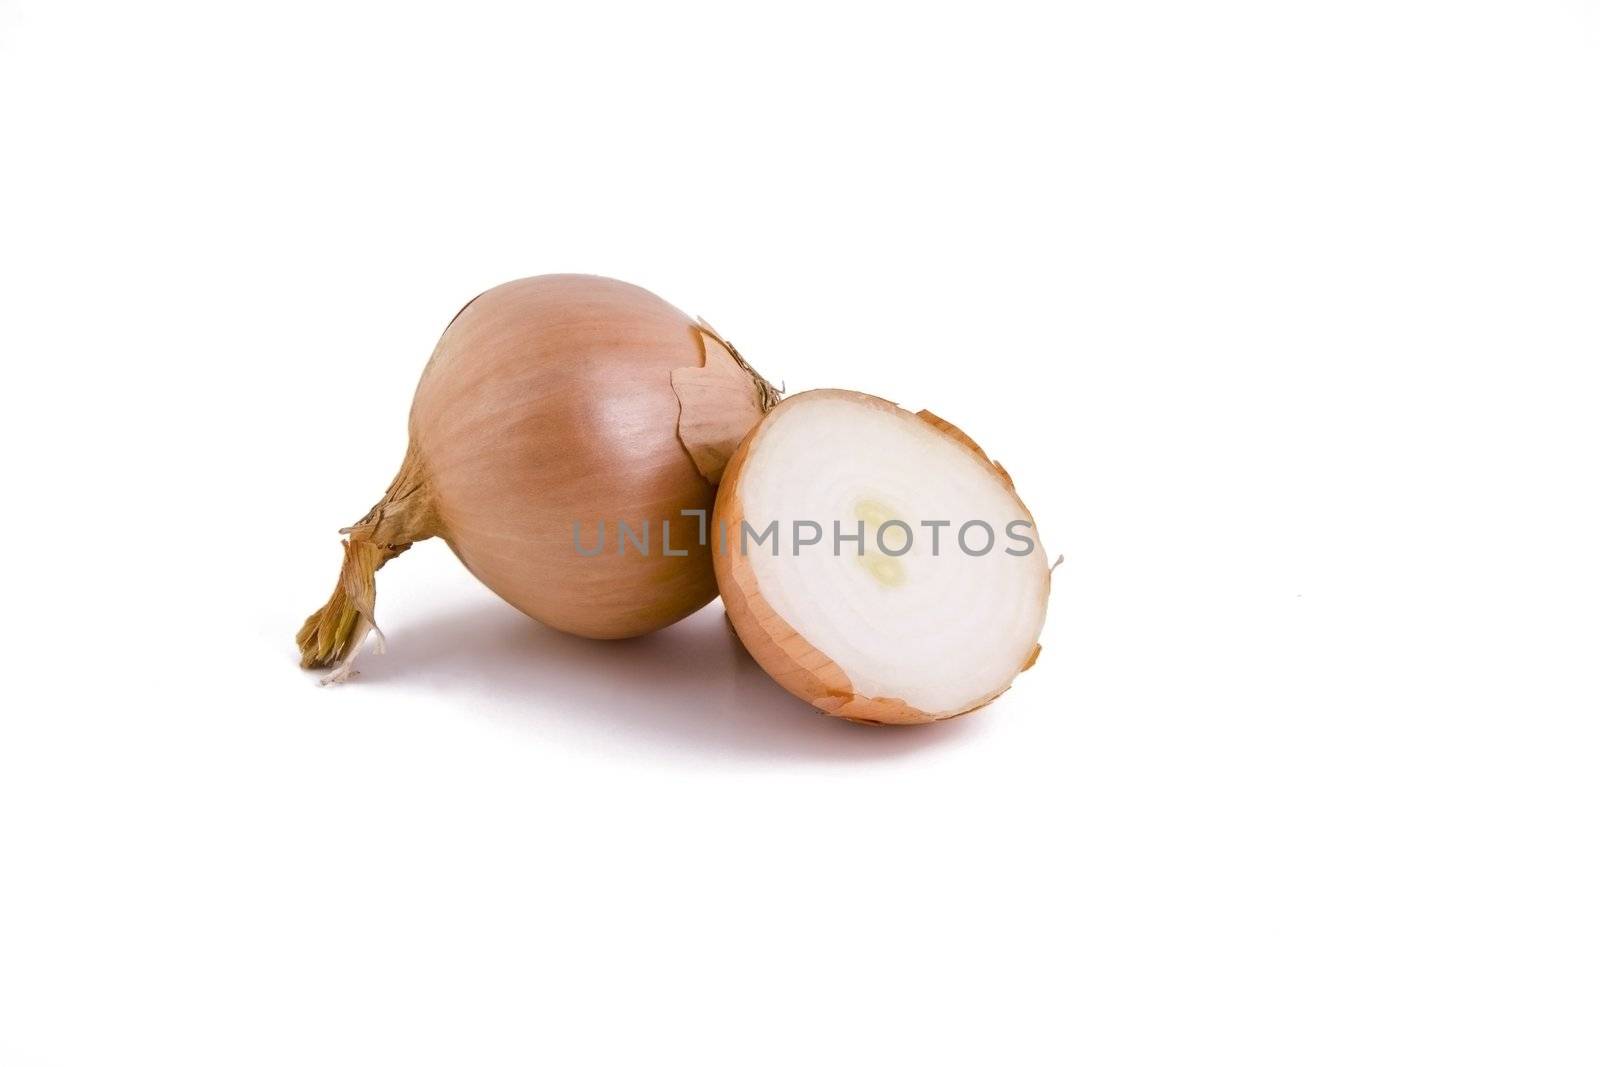 Golden onions by Gbuglok